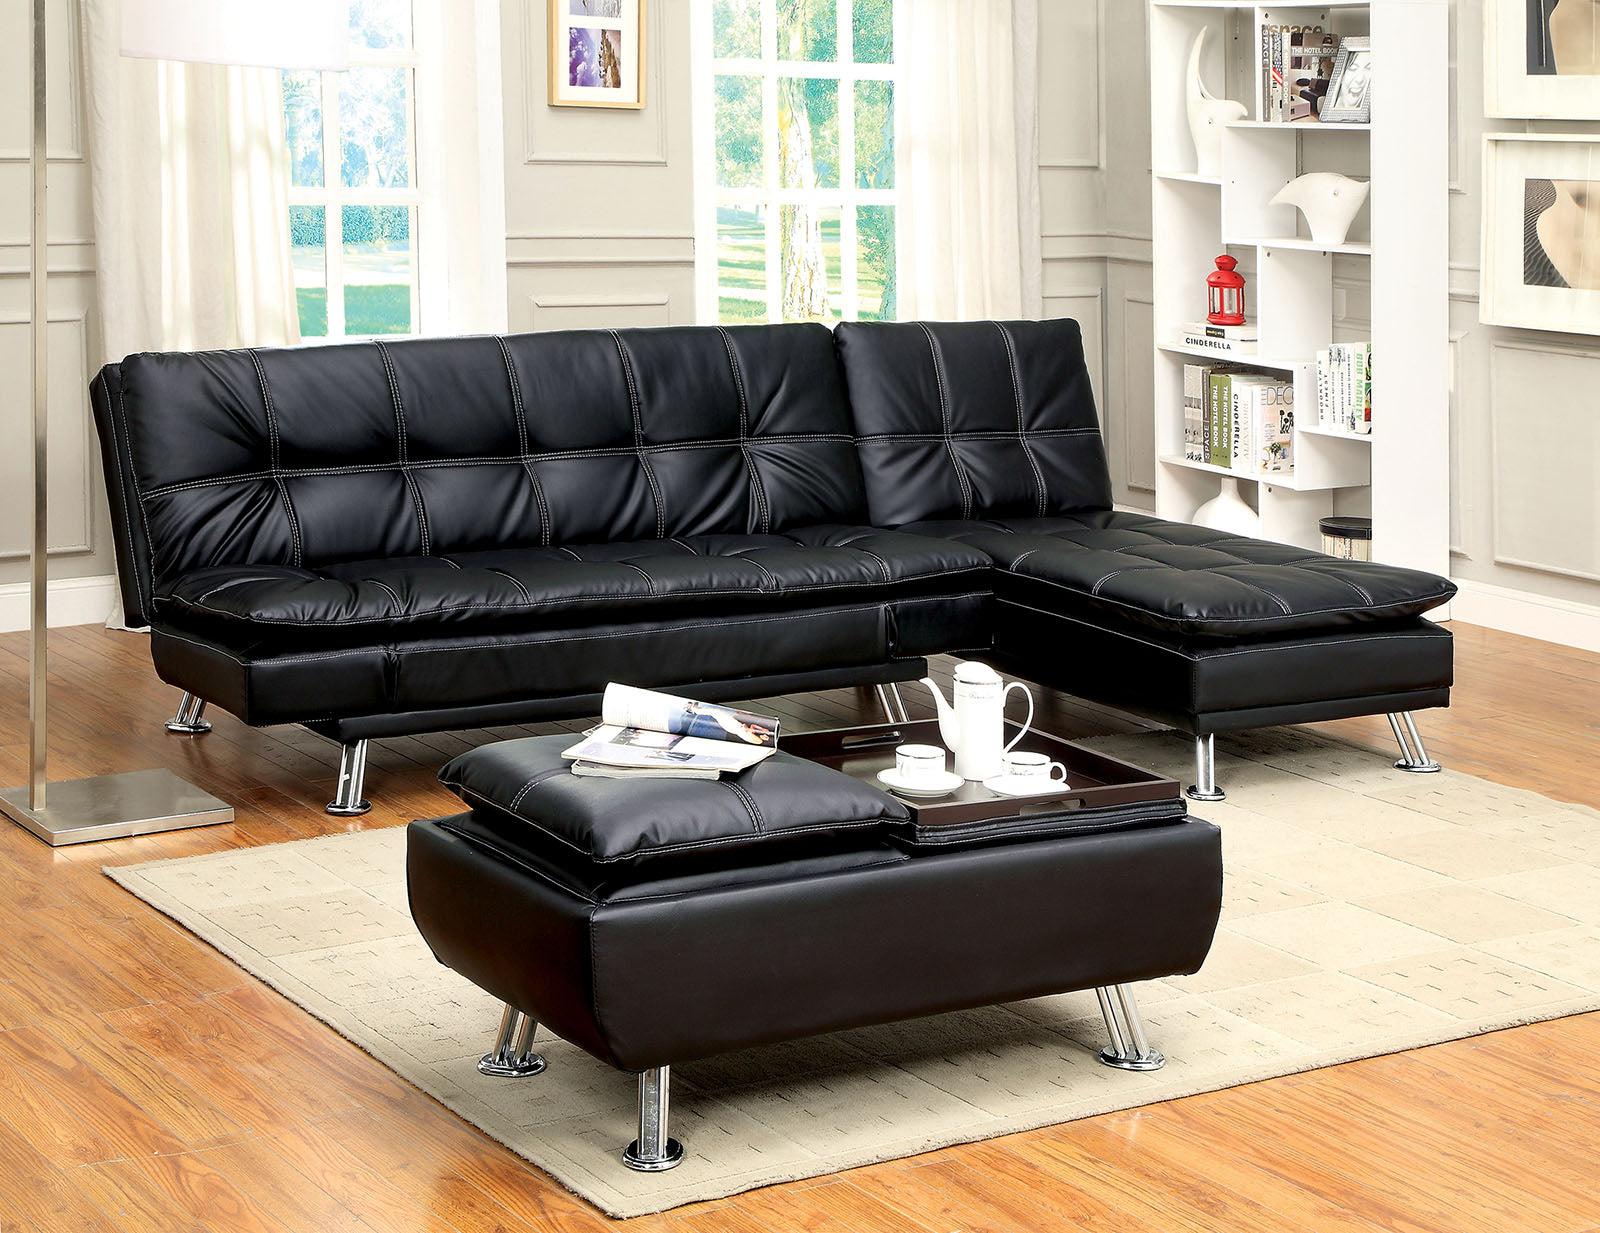 Contemporary Futon Sofa Chaise and Ottoman CM2677BK-3PC Hauser CM2677BK-3PC in Black Leatherette